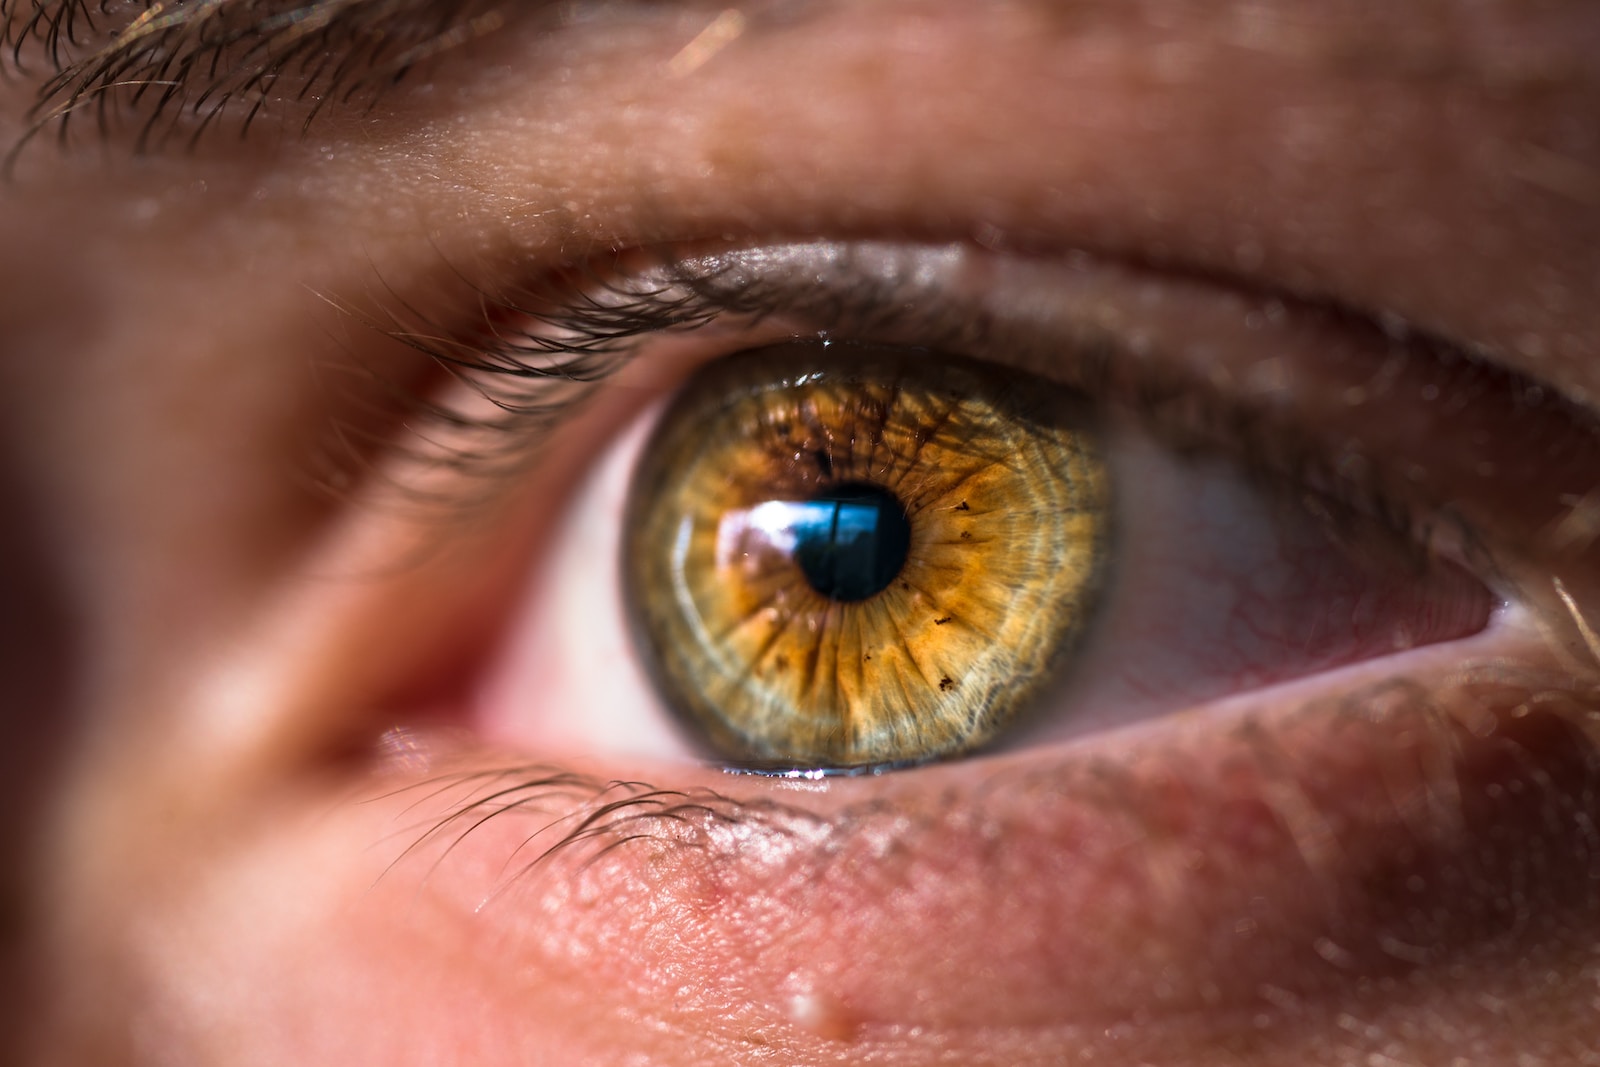 Who Treats Eye Infections